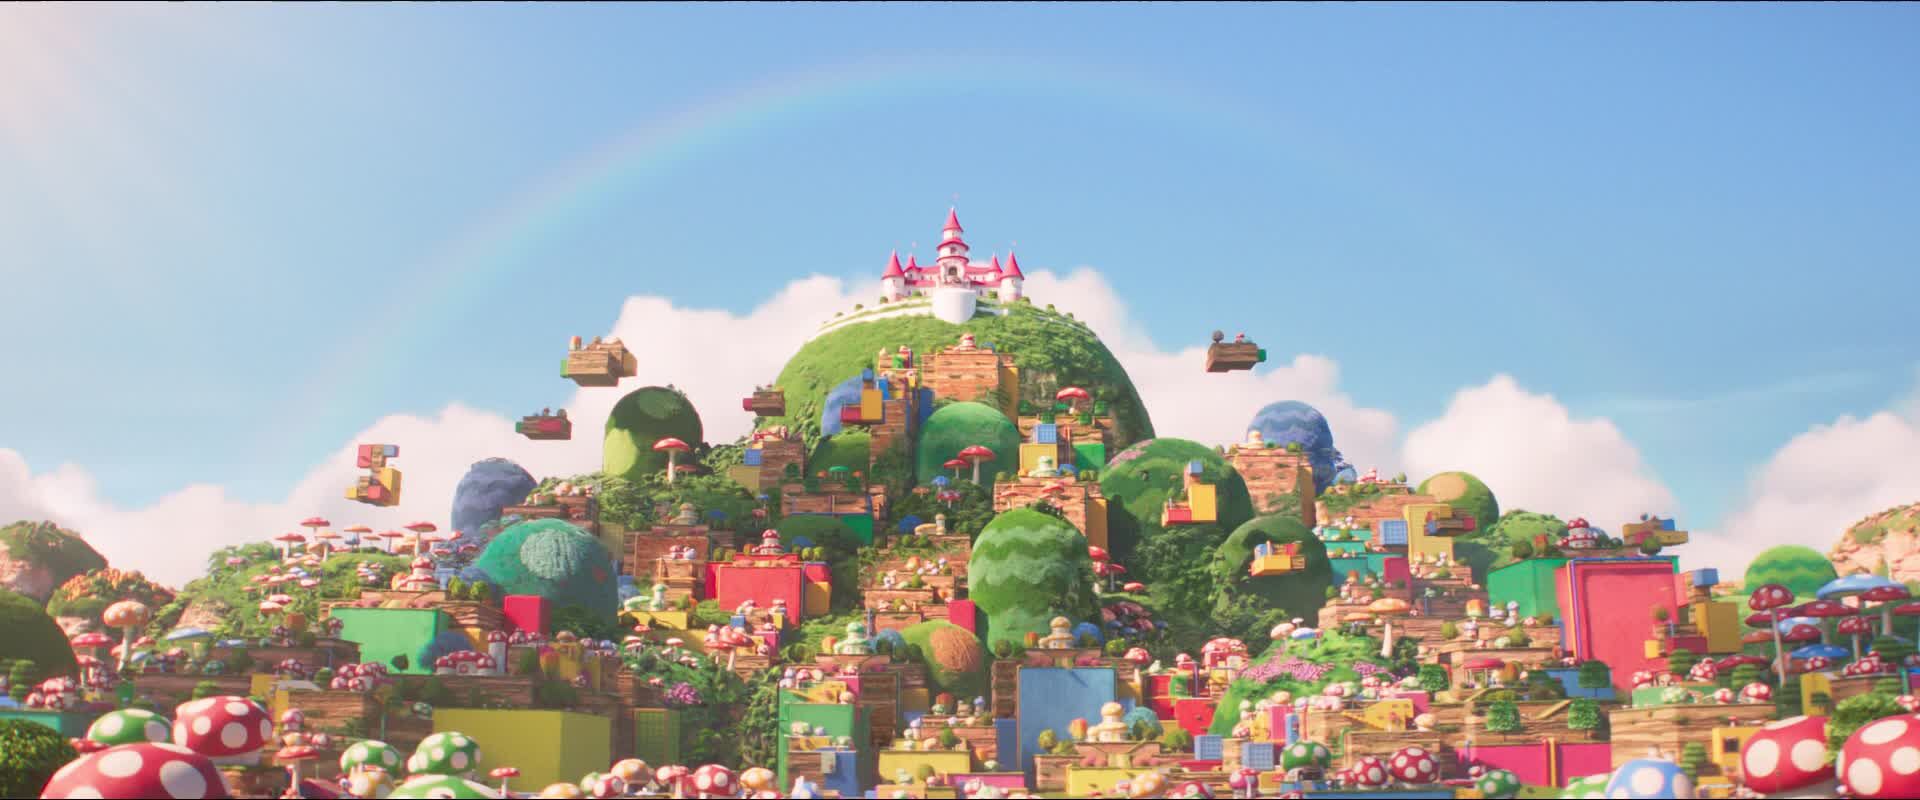 Super Mario Bros Movie Mushroom Kingdom design choices